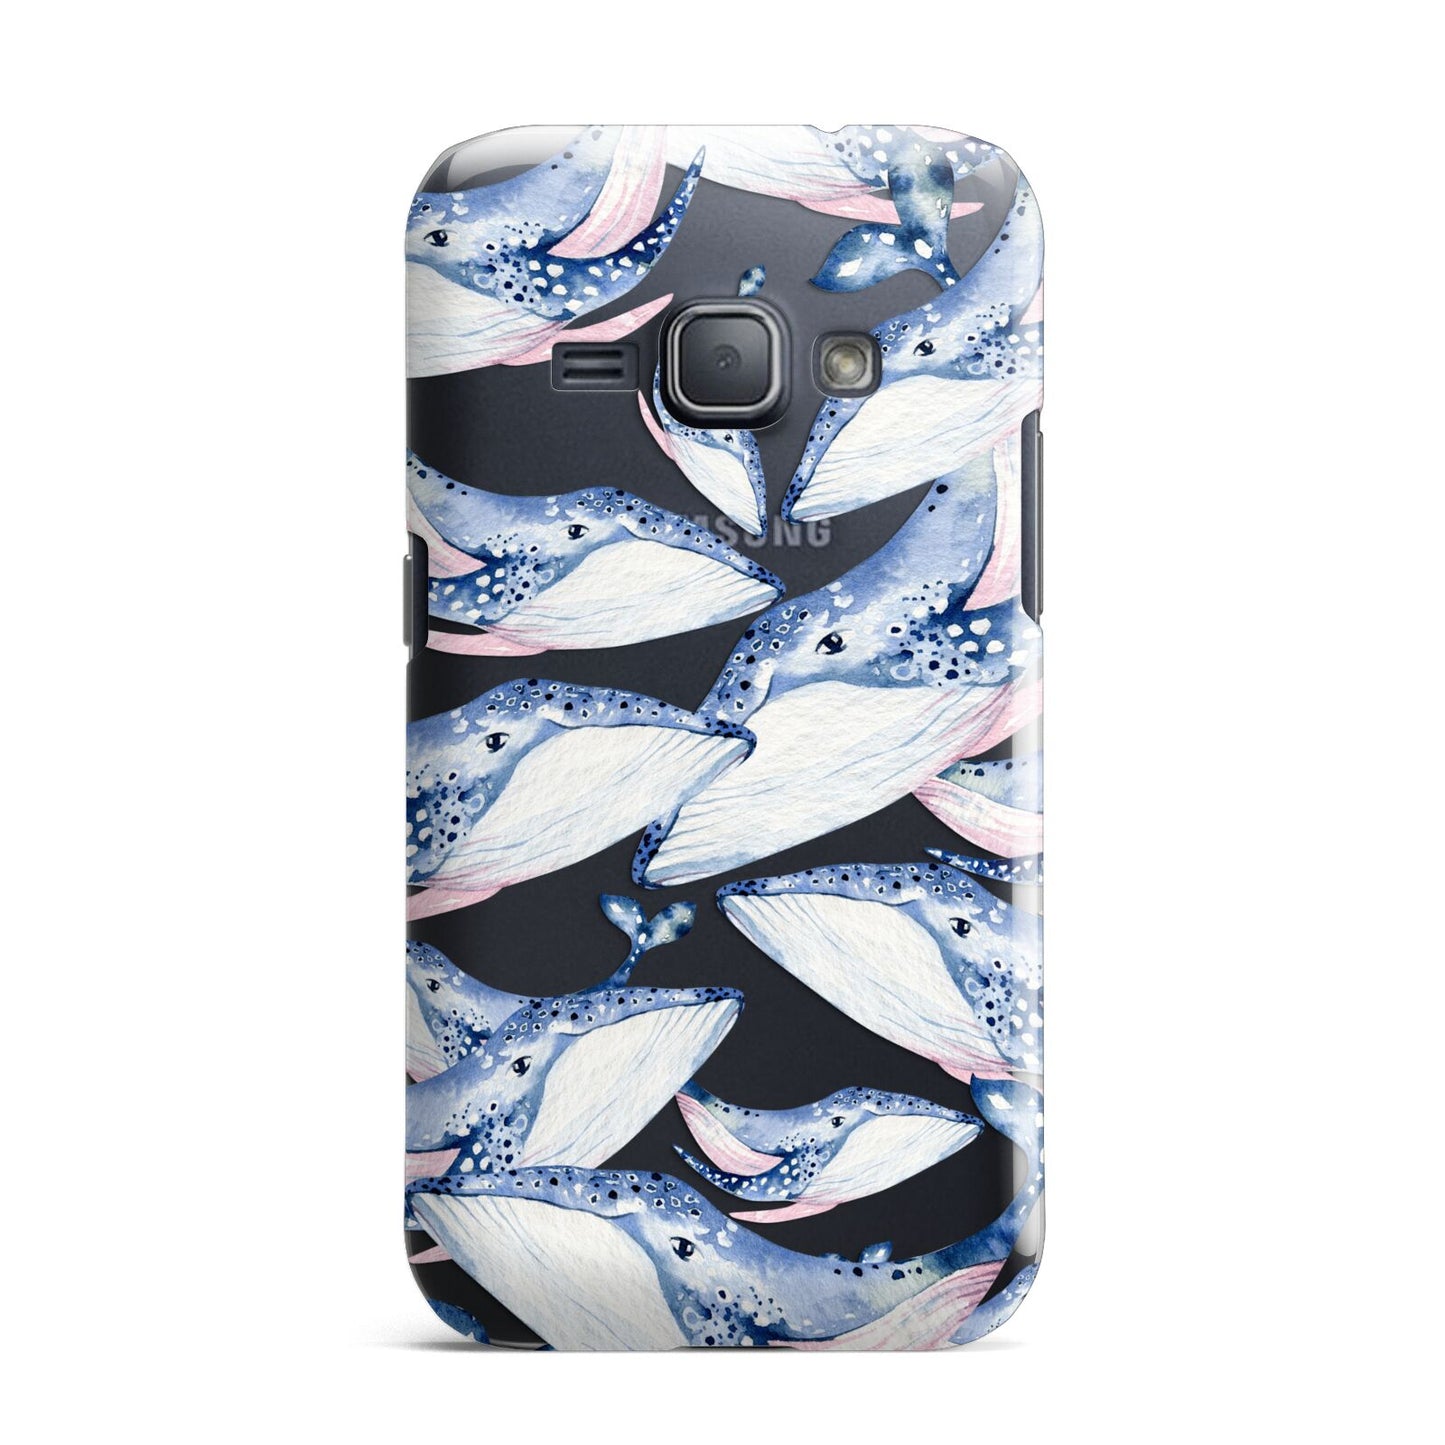 Whale Samsung Galaxy J1 2016 Case